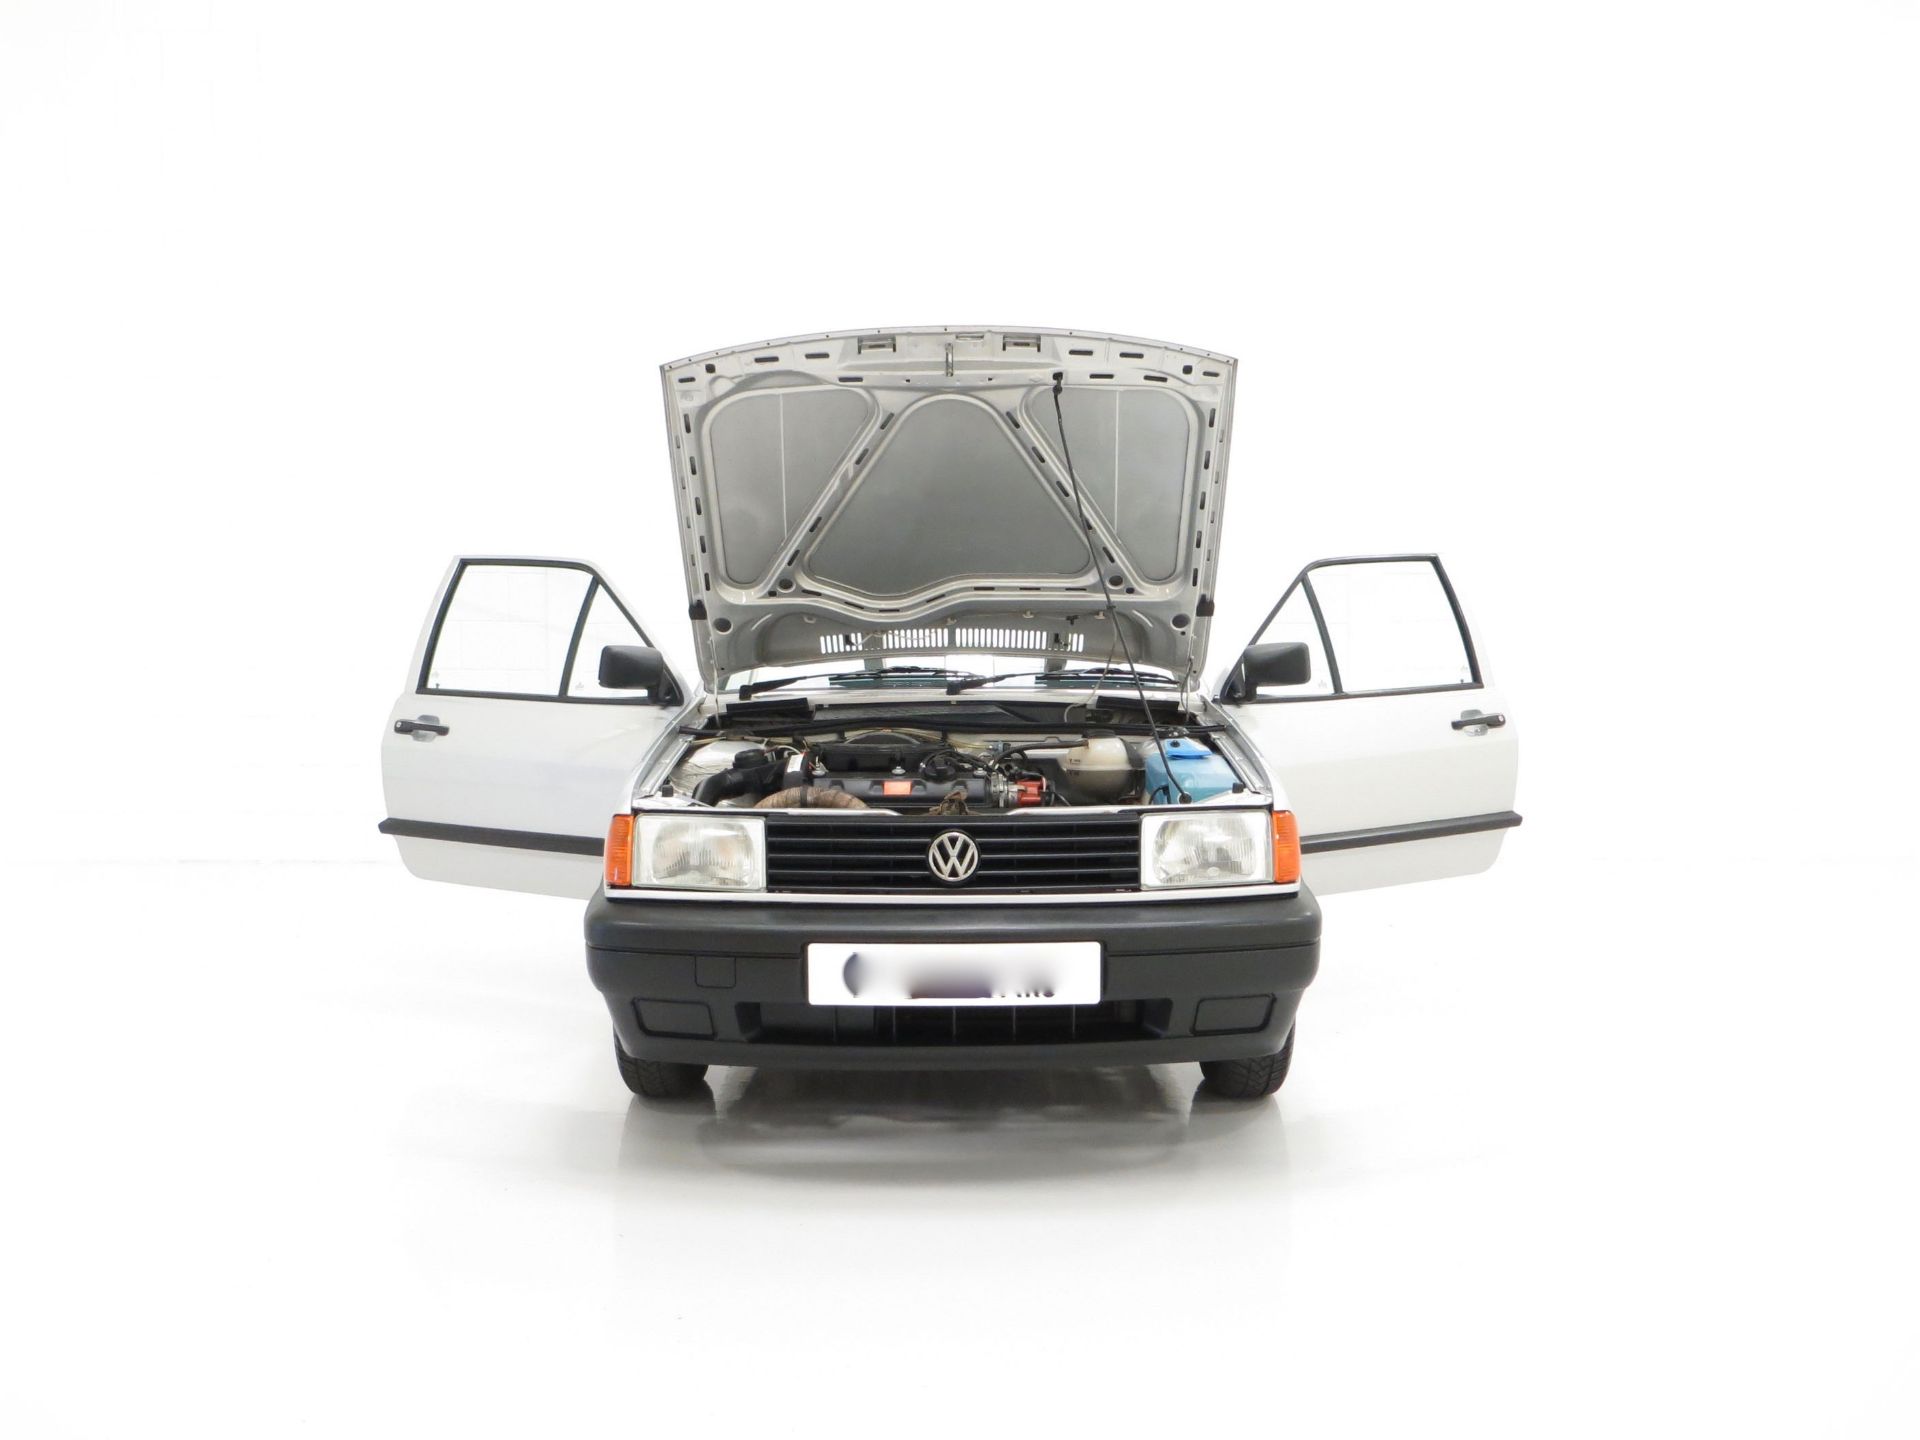 1992 Volkswagen Polo Mk2F Genesis - Image 75 of 86